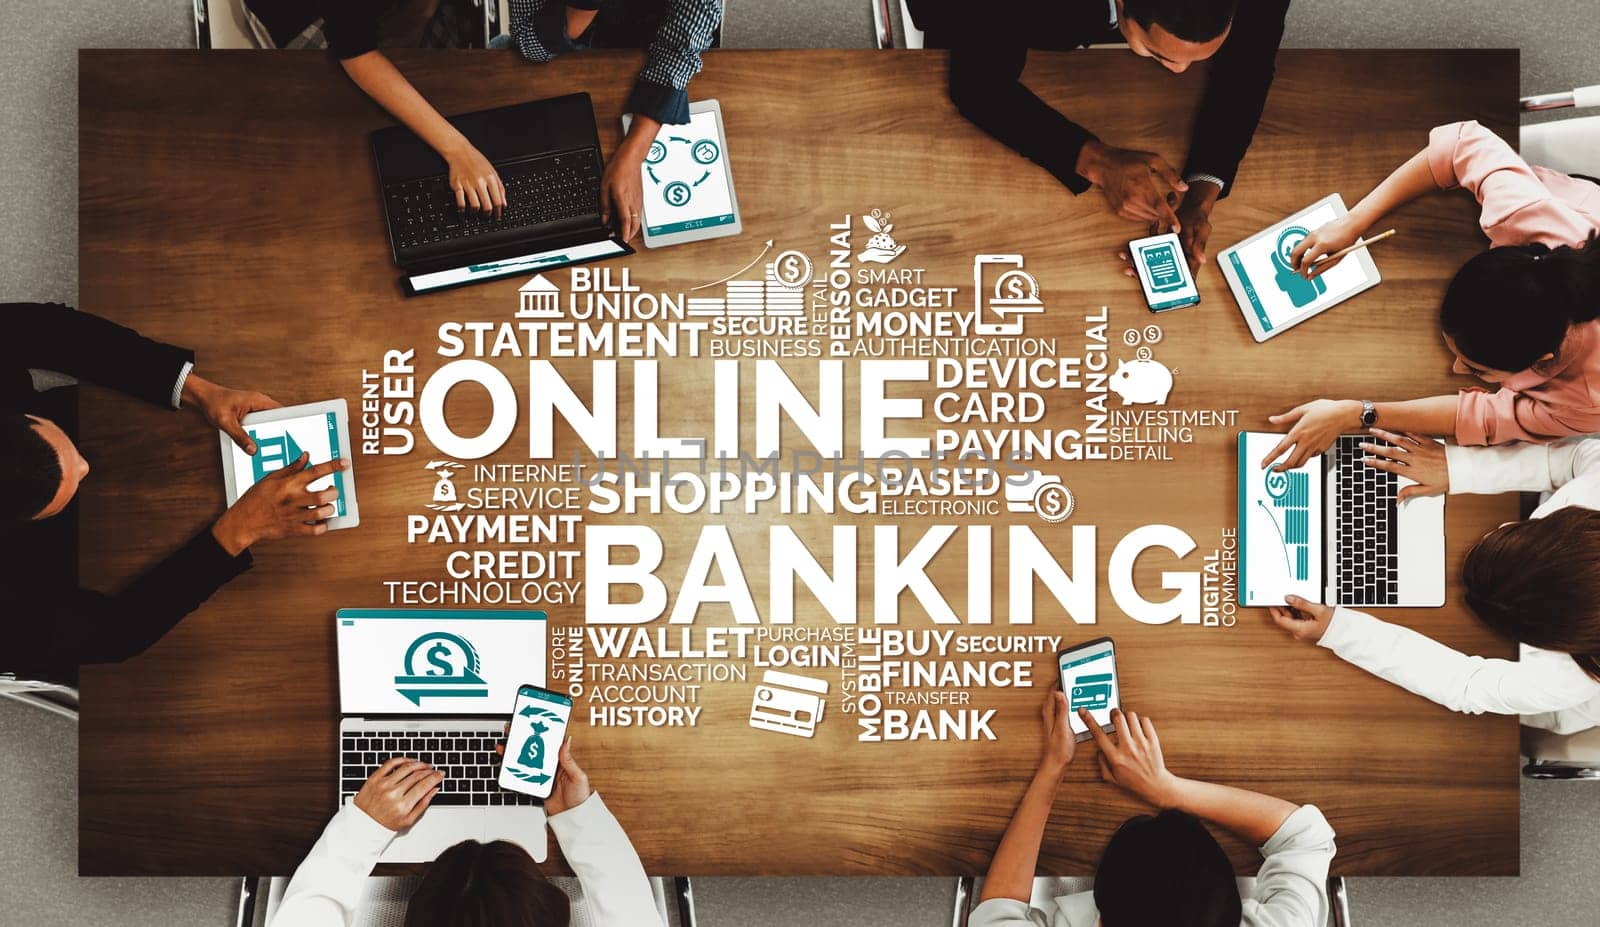 Online Banking for Digital Money Technology uds by biancoblue